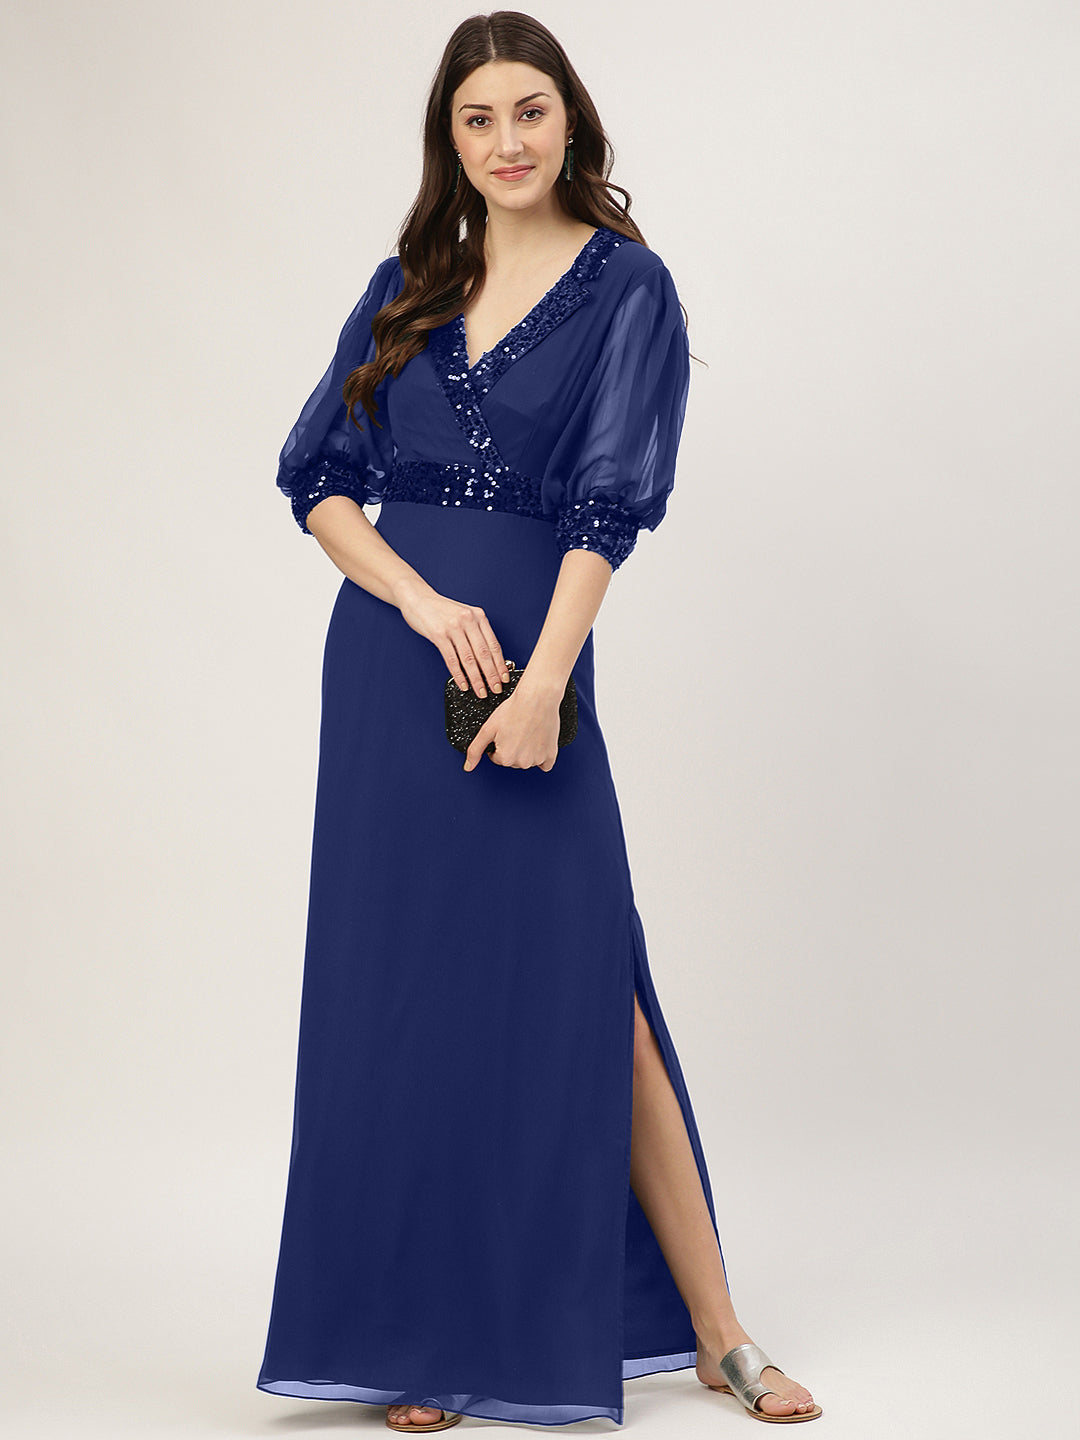 Navy Blue Embellished Slit Long Dress with 3/4 Sleeves